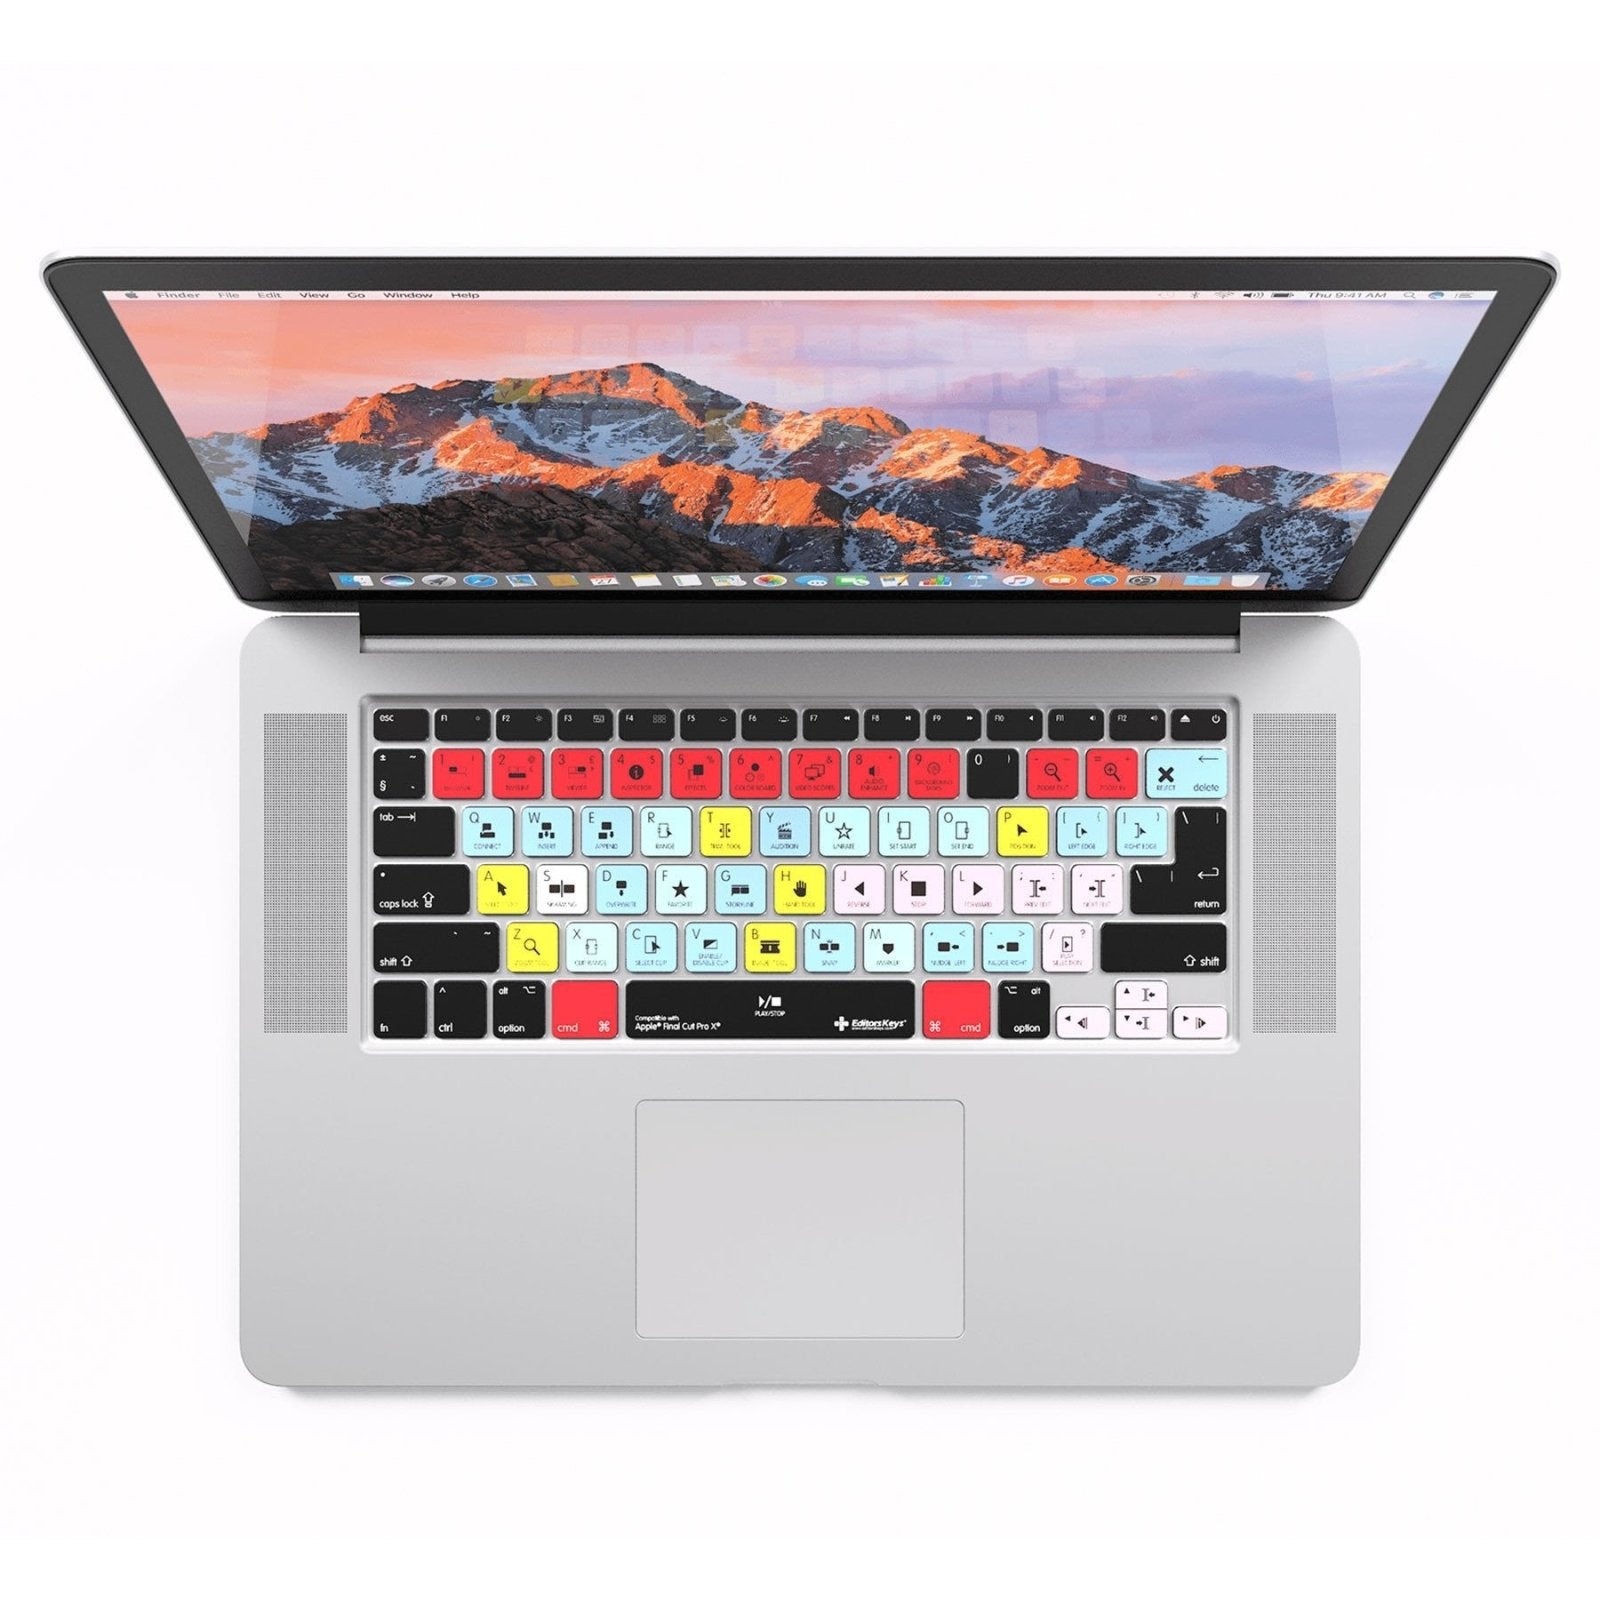 Final Cut Pro Keyboard Covers for MacBook and iMac - Editors Keys